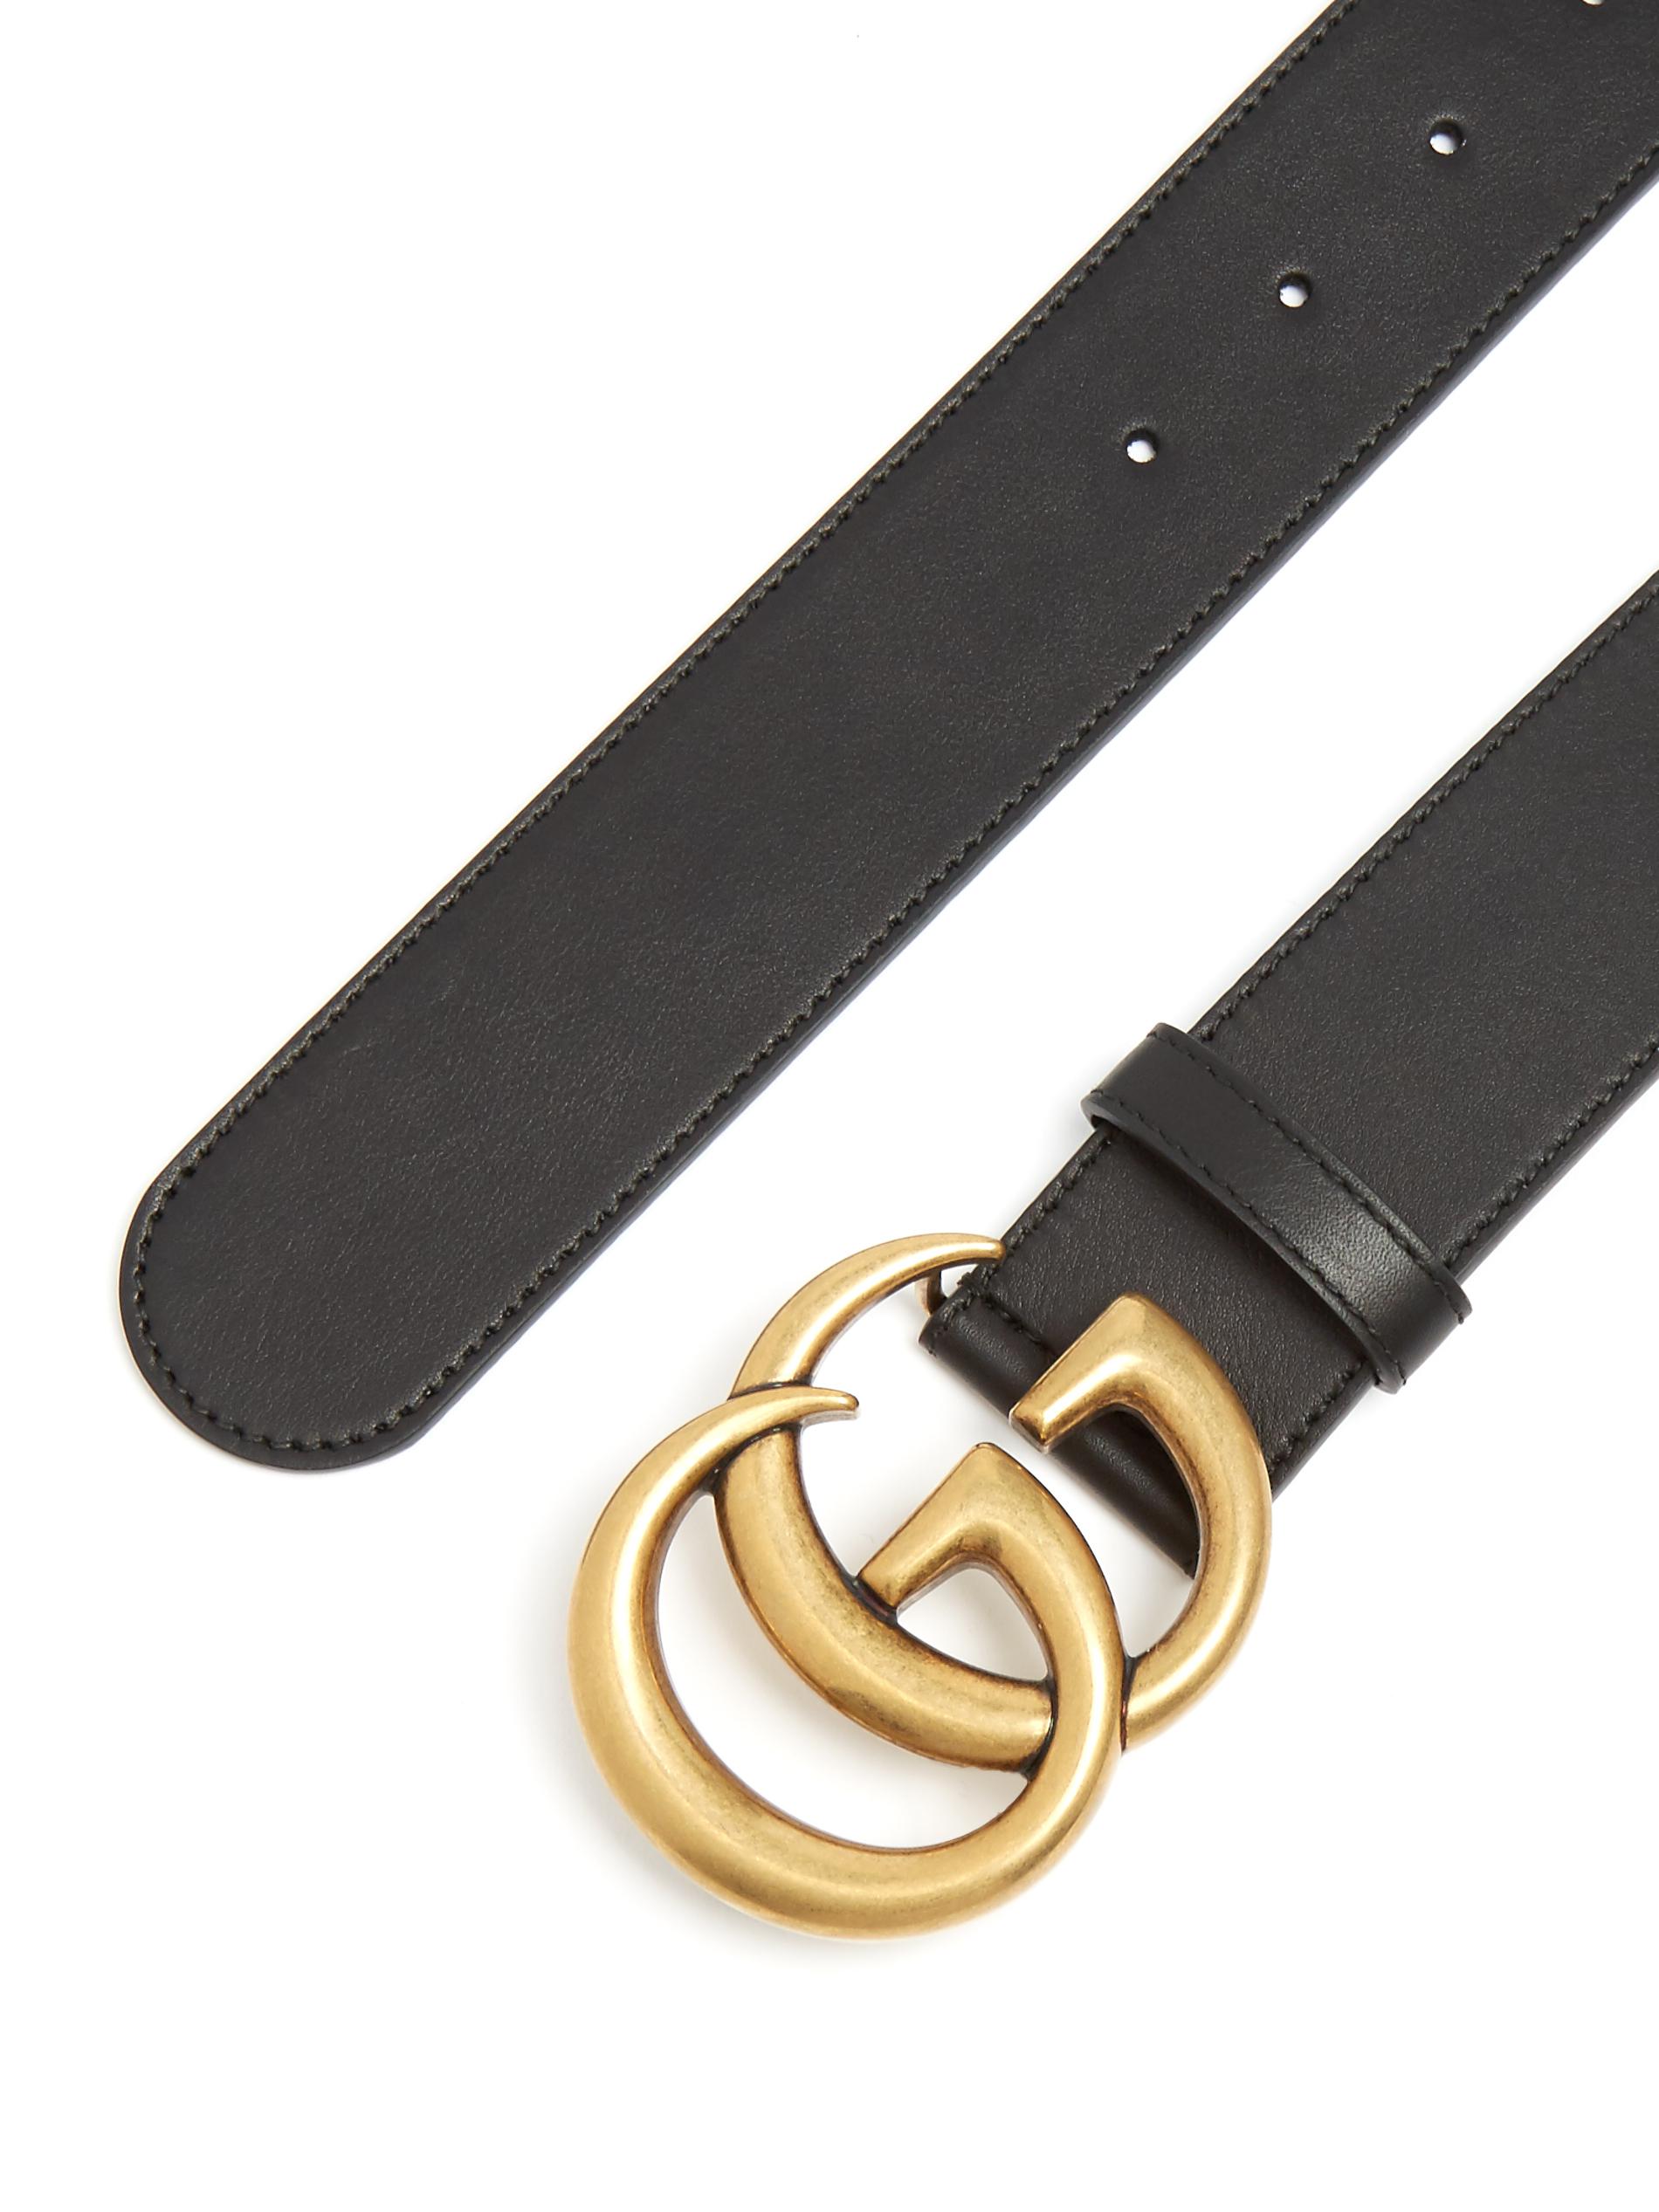 Lyst - Gucci Gg-logo 4cm Leather Belt in Black